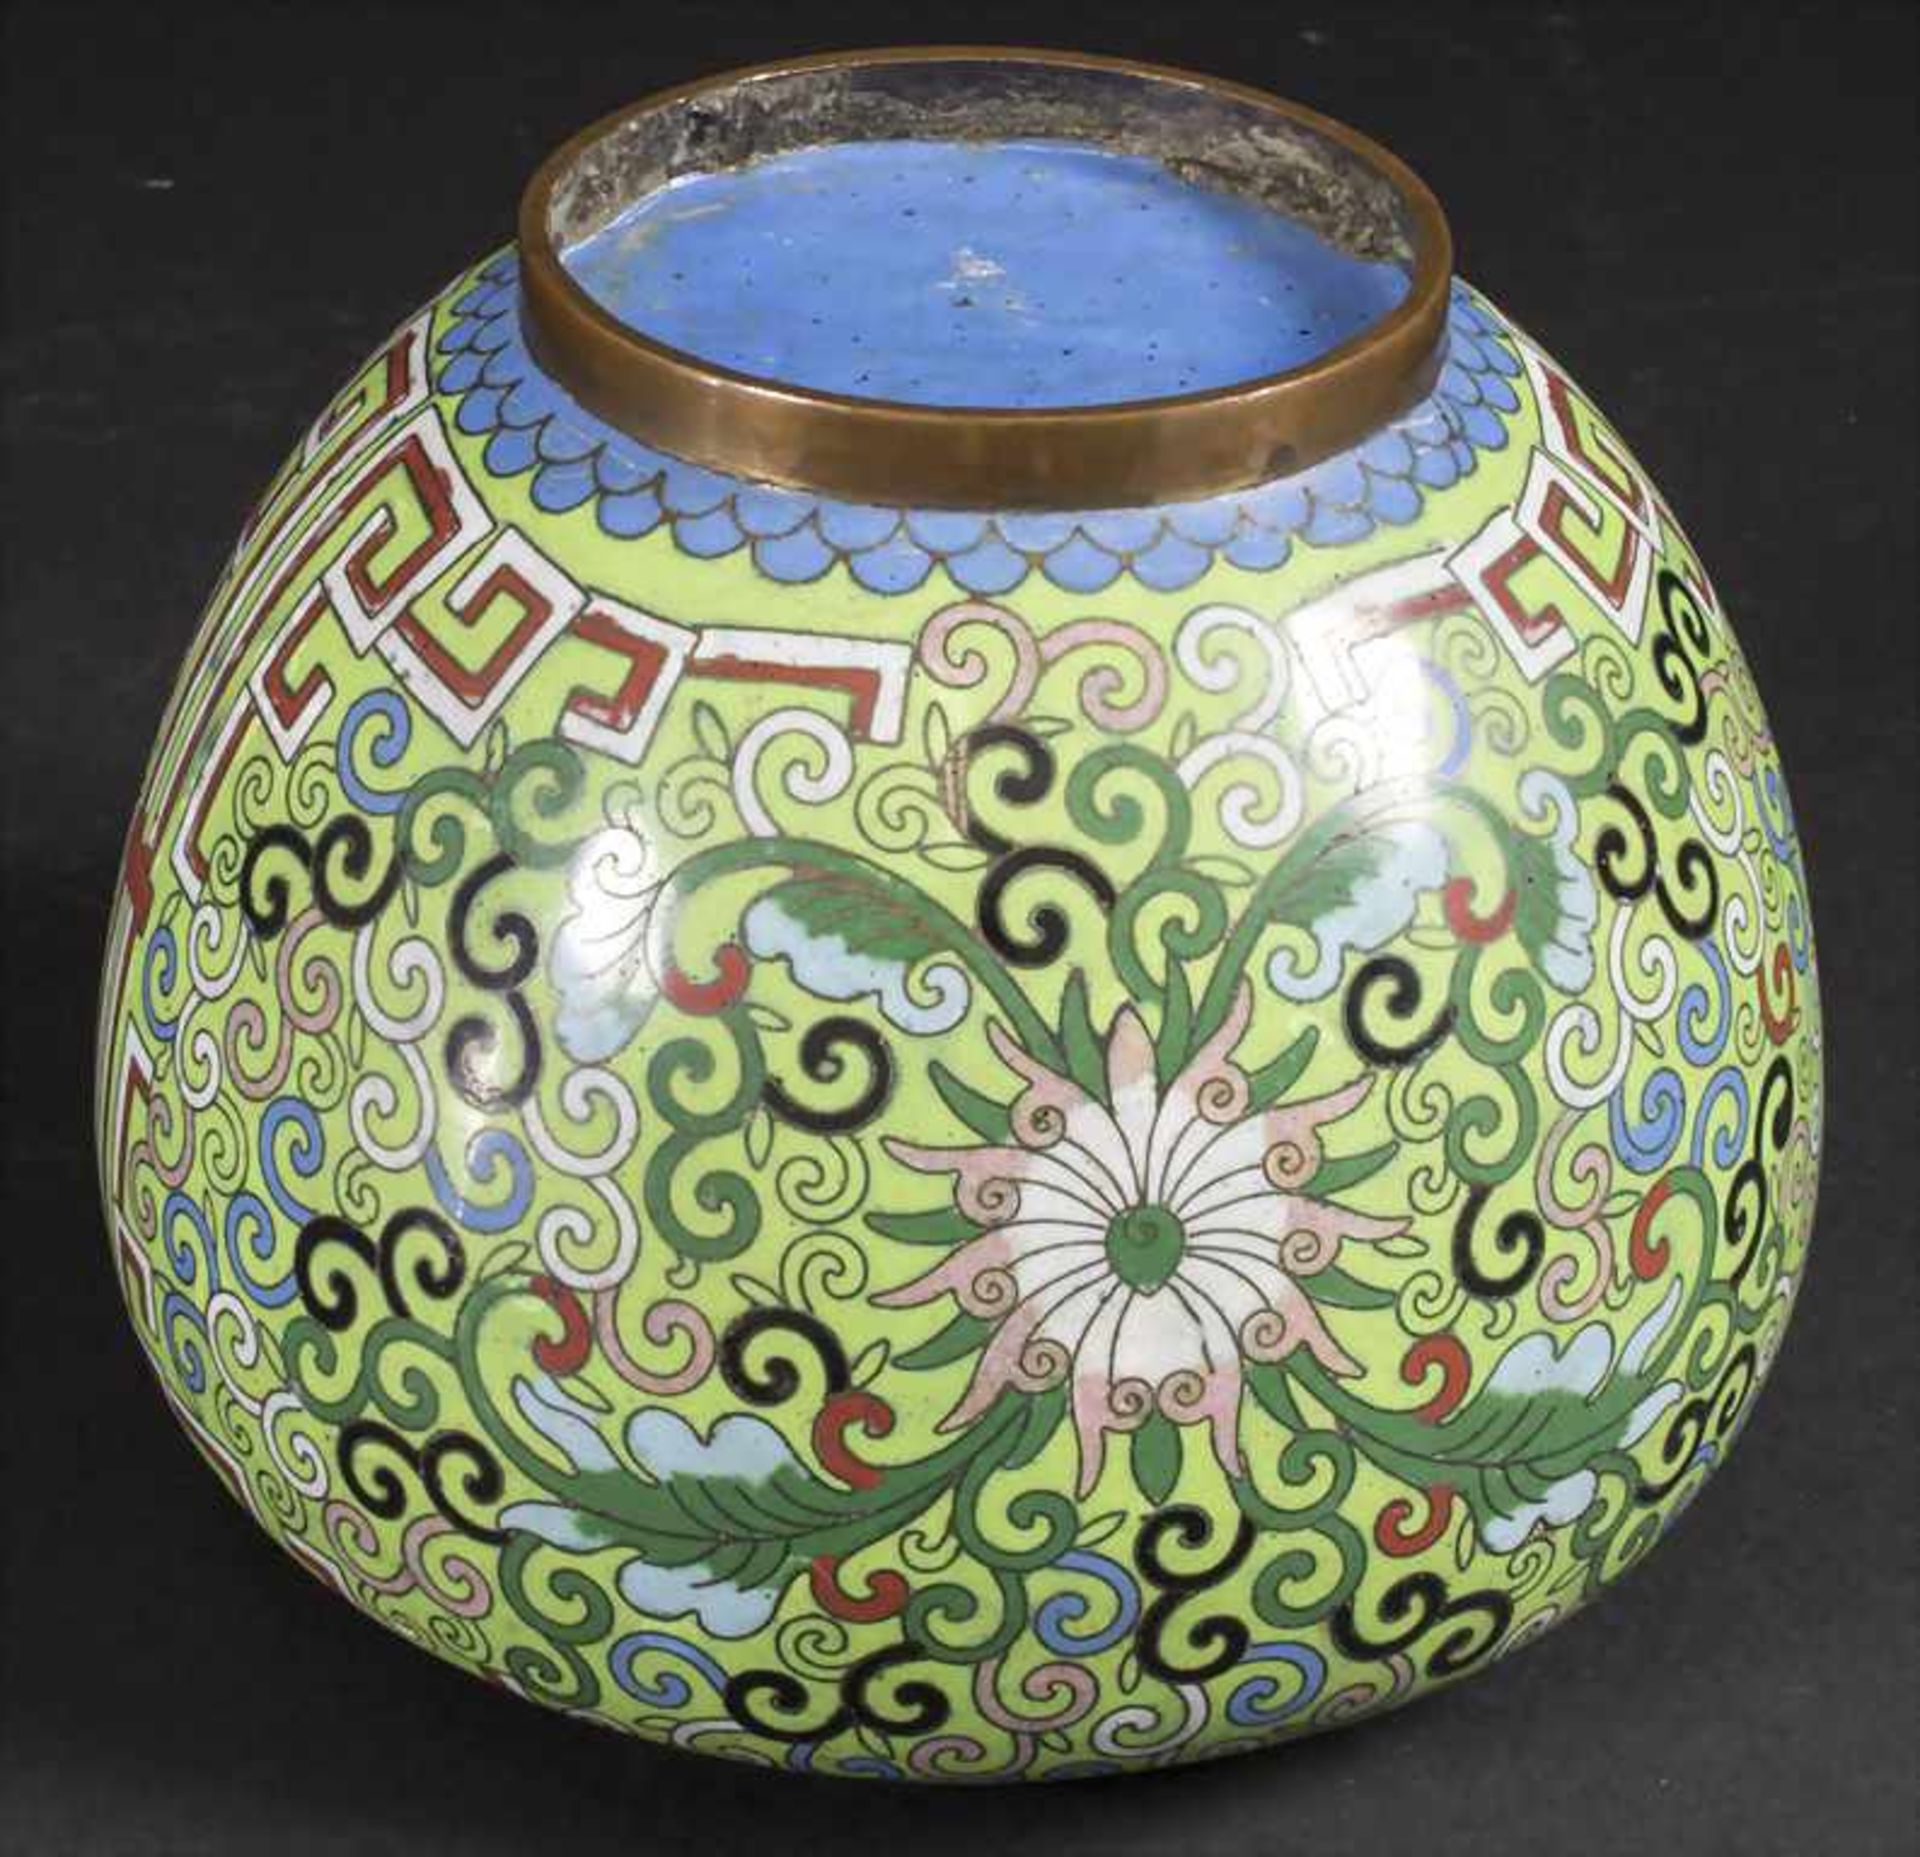 Cloisonné-Ziervase / An enamelled decorative vase, China, Qing-Dynastie (1644-1911), 19. Jh. - Image 6 of 7